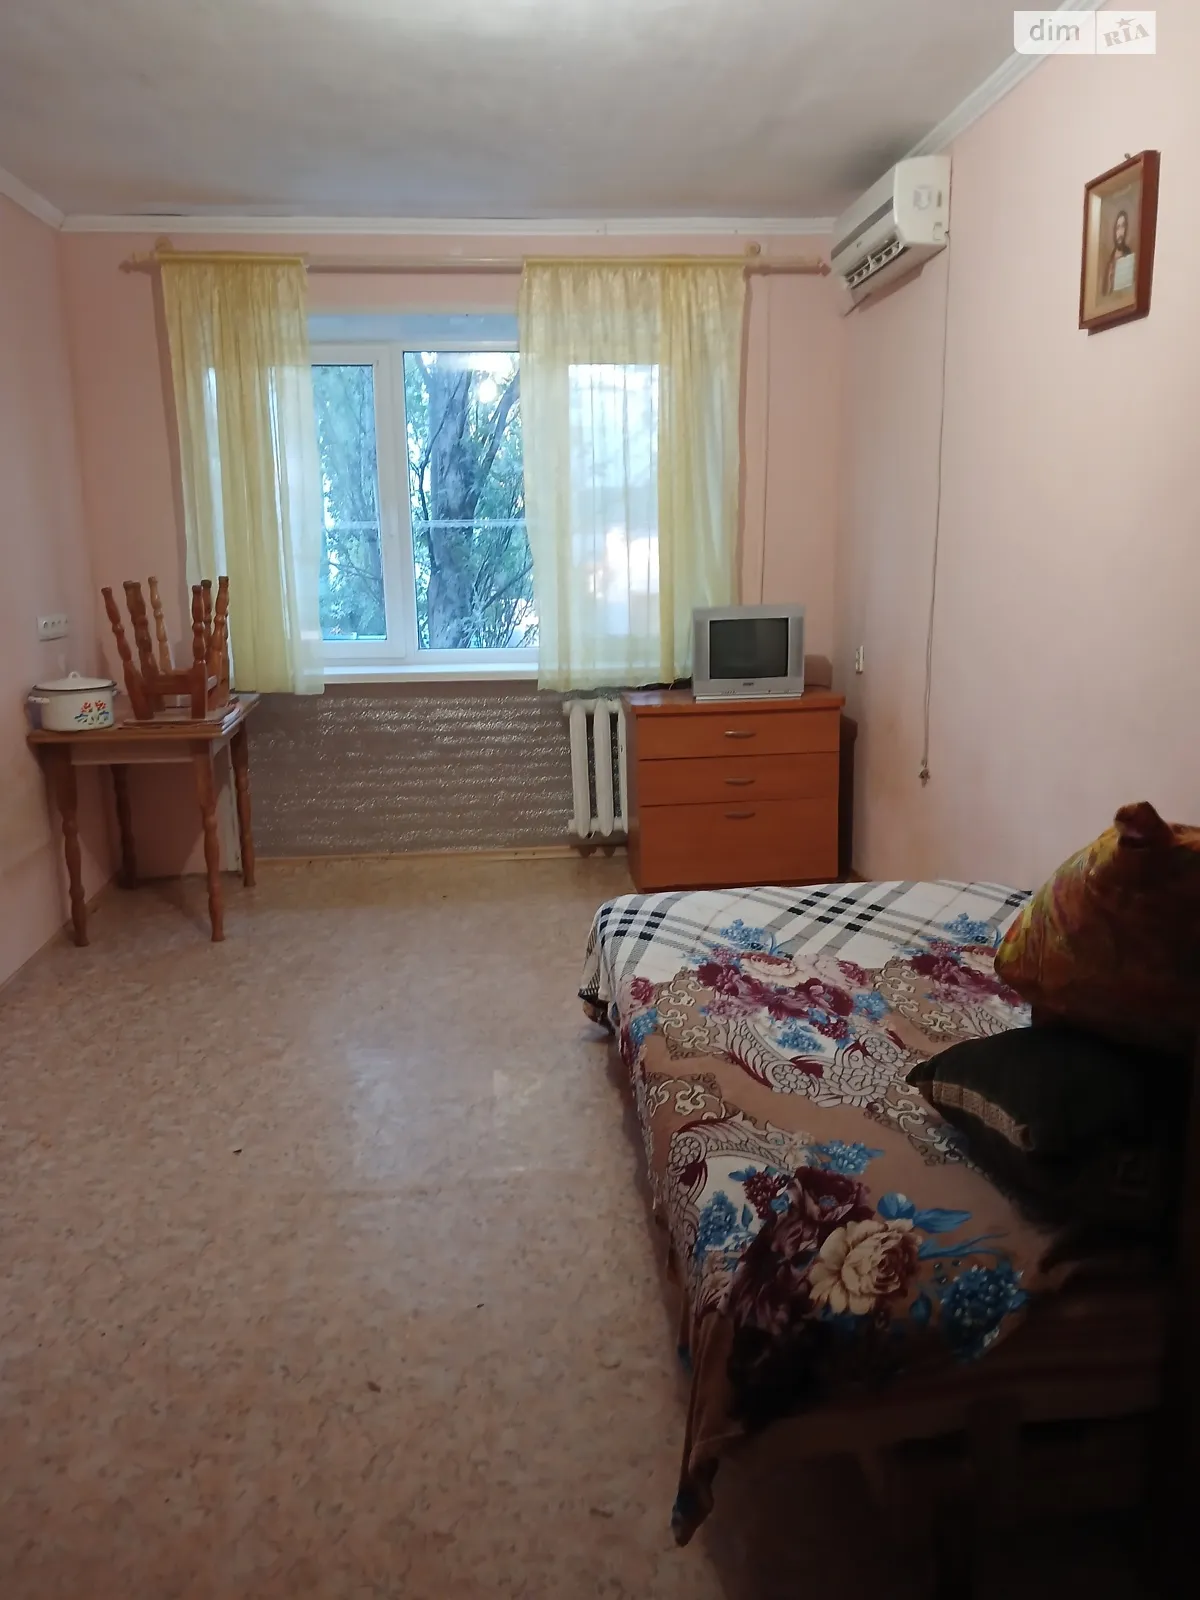 Продается комната 35 кв. м в Одессе, цена: 8500 $ - фото 1